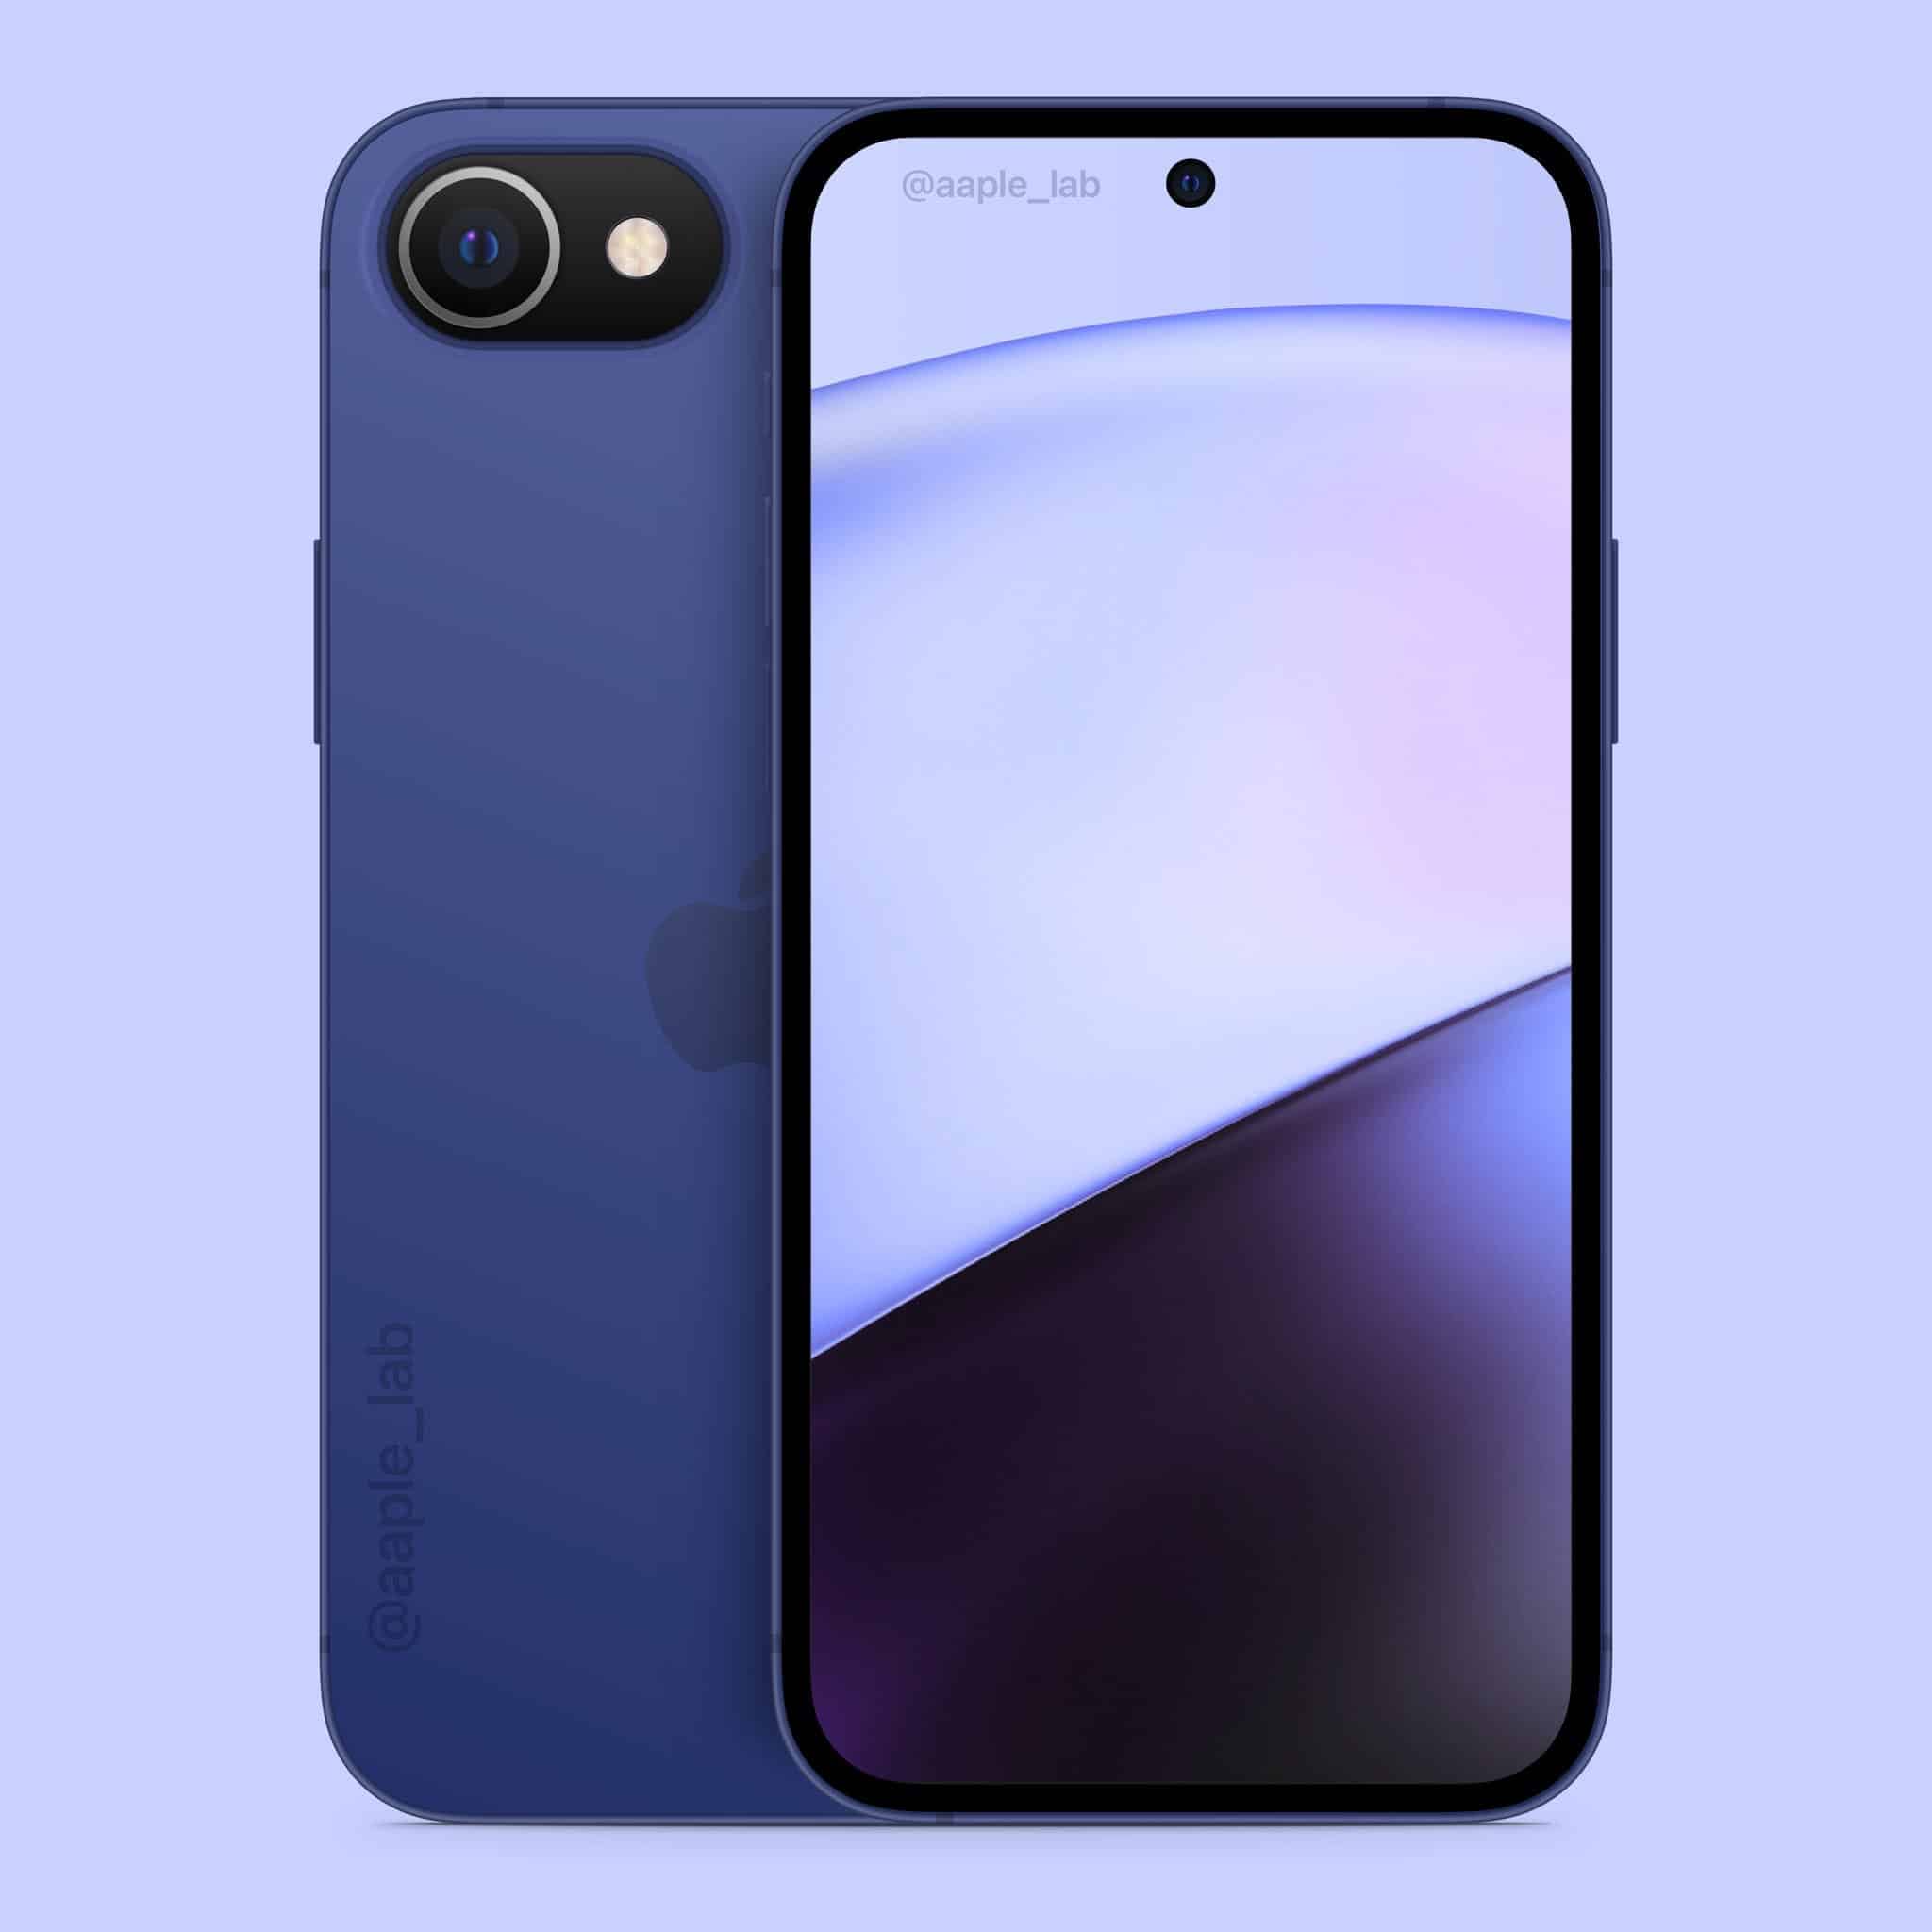 Will Iphone Se 22 Copy The Xiaomi Phone Design